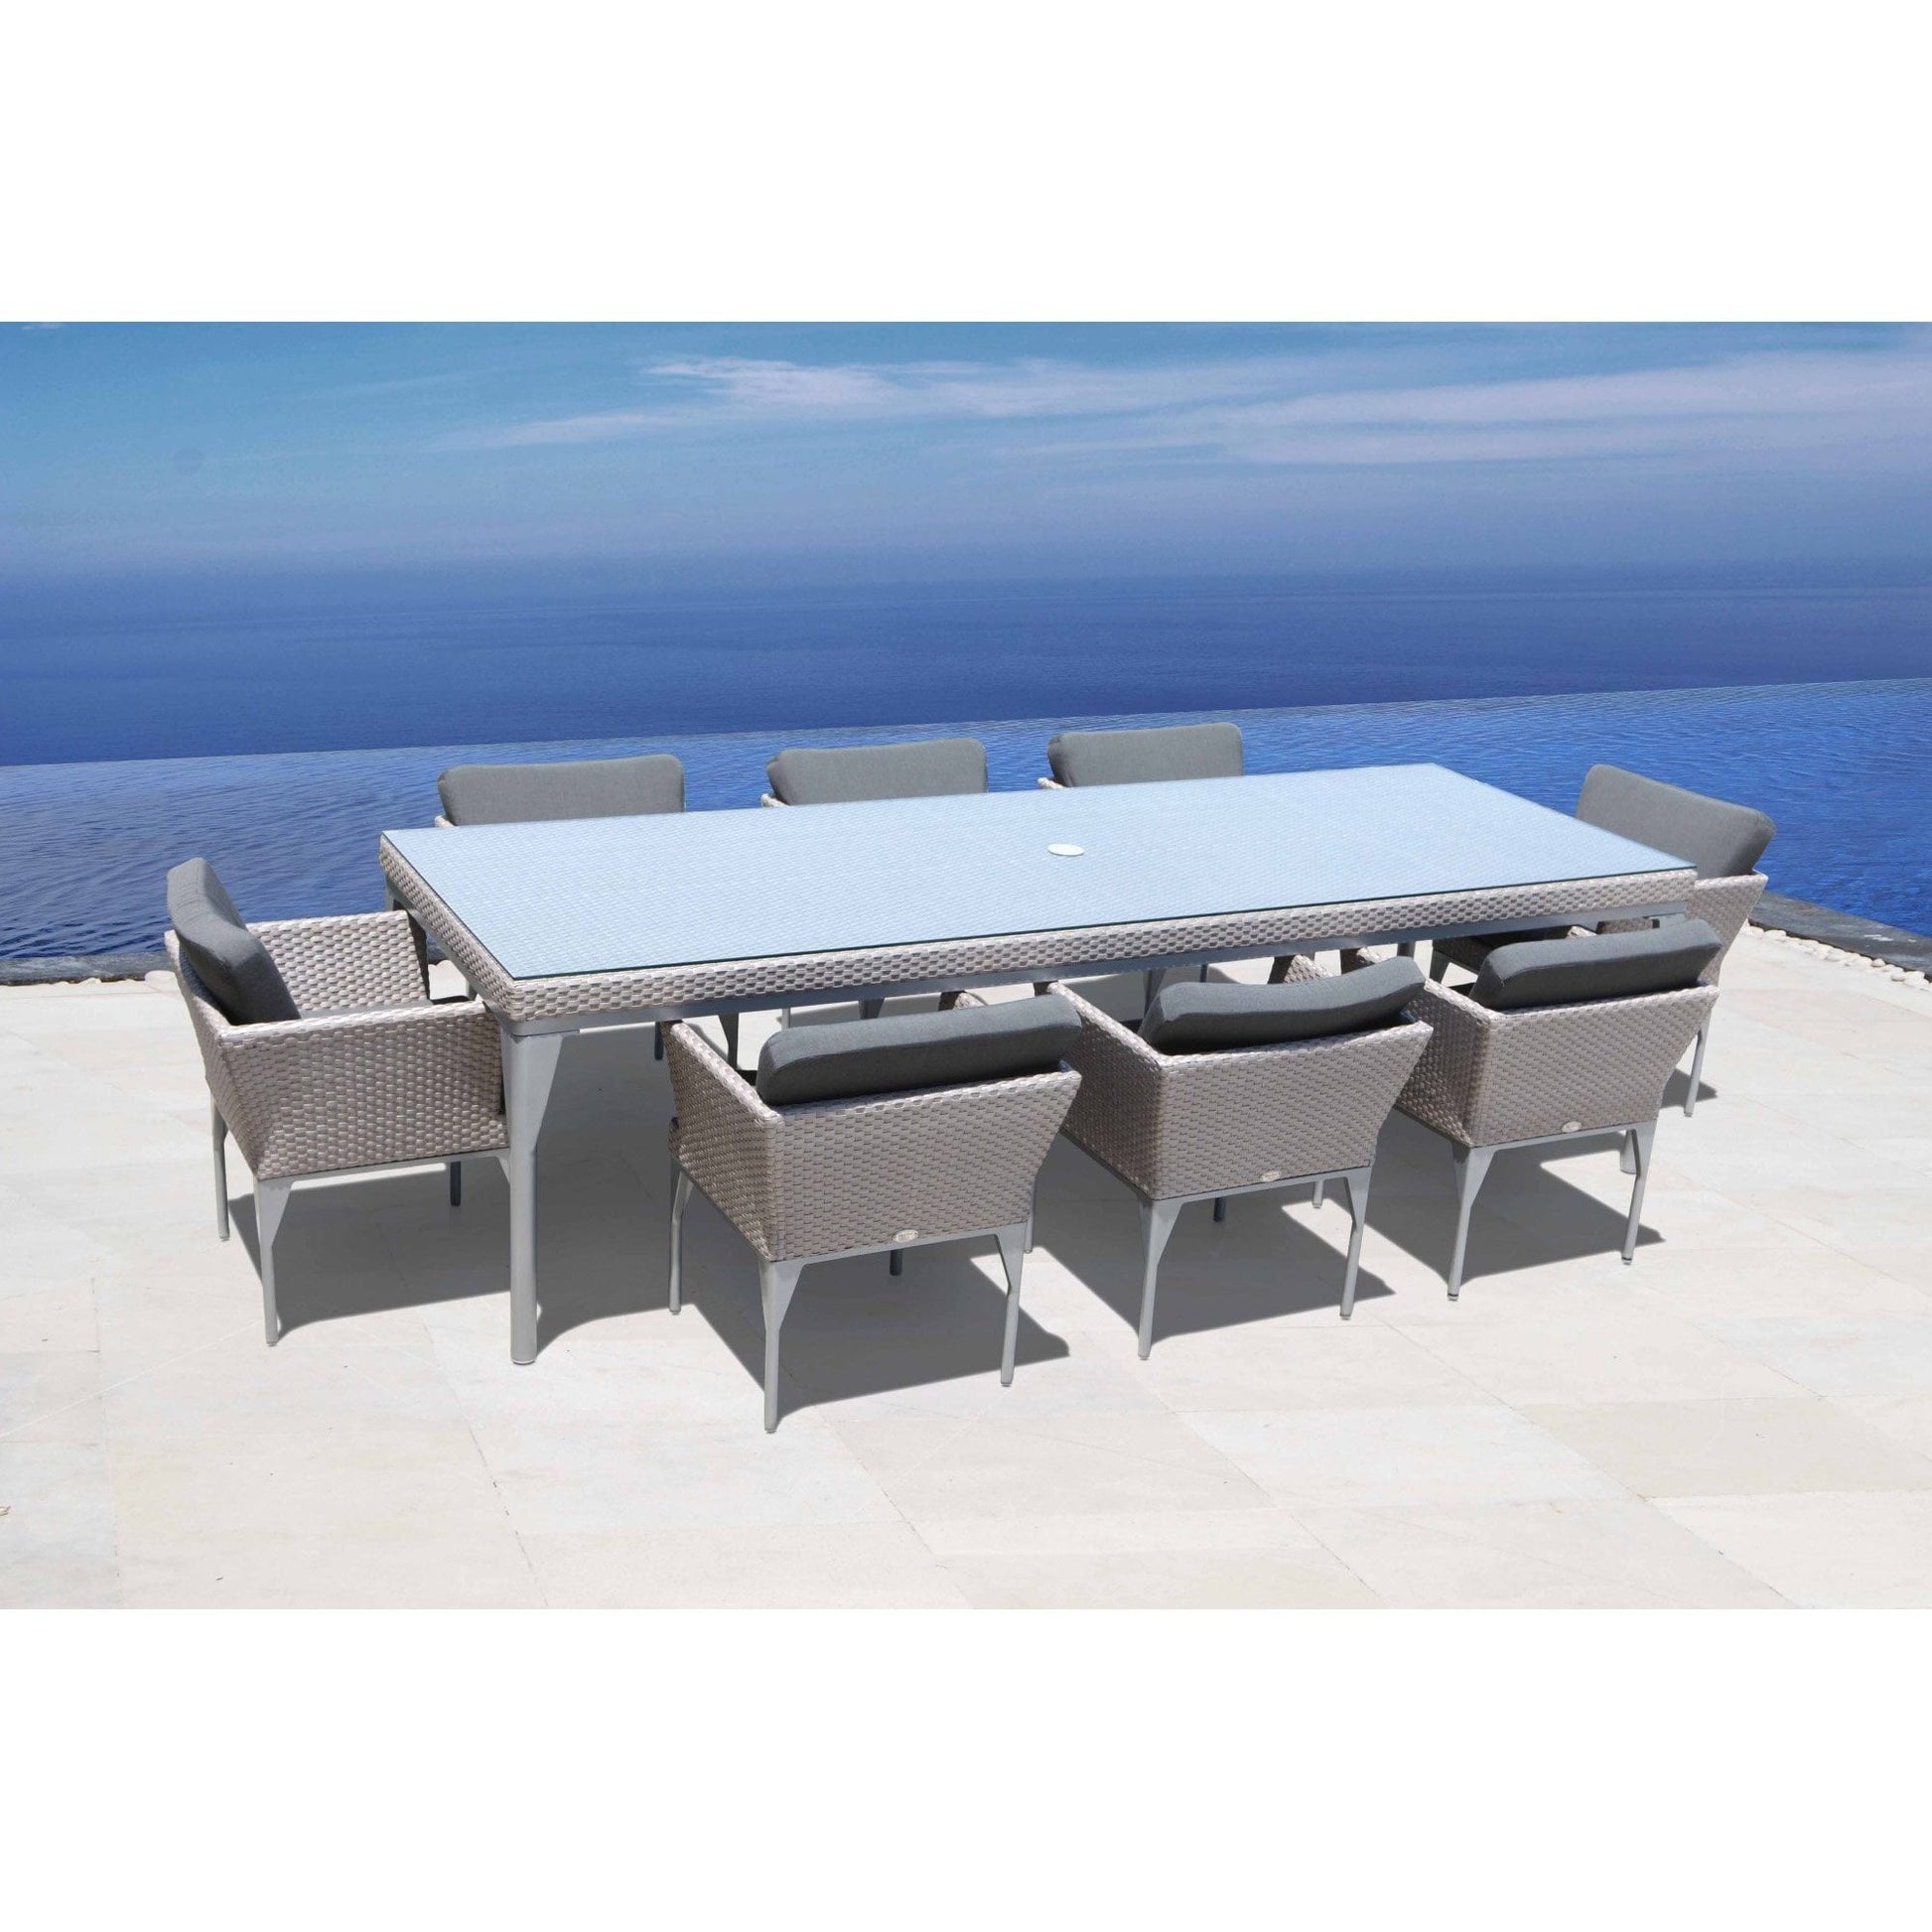 Brafta Silver Walnut Rectangle Dining Table - PadioLiving - Brafta Silver Walnut Rectangle Dining Table - Outdoor Dining Table - 8 Seat - PadioLiving